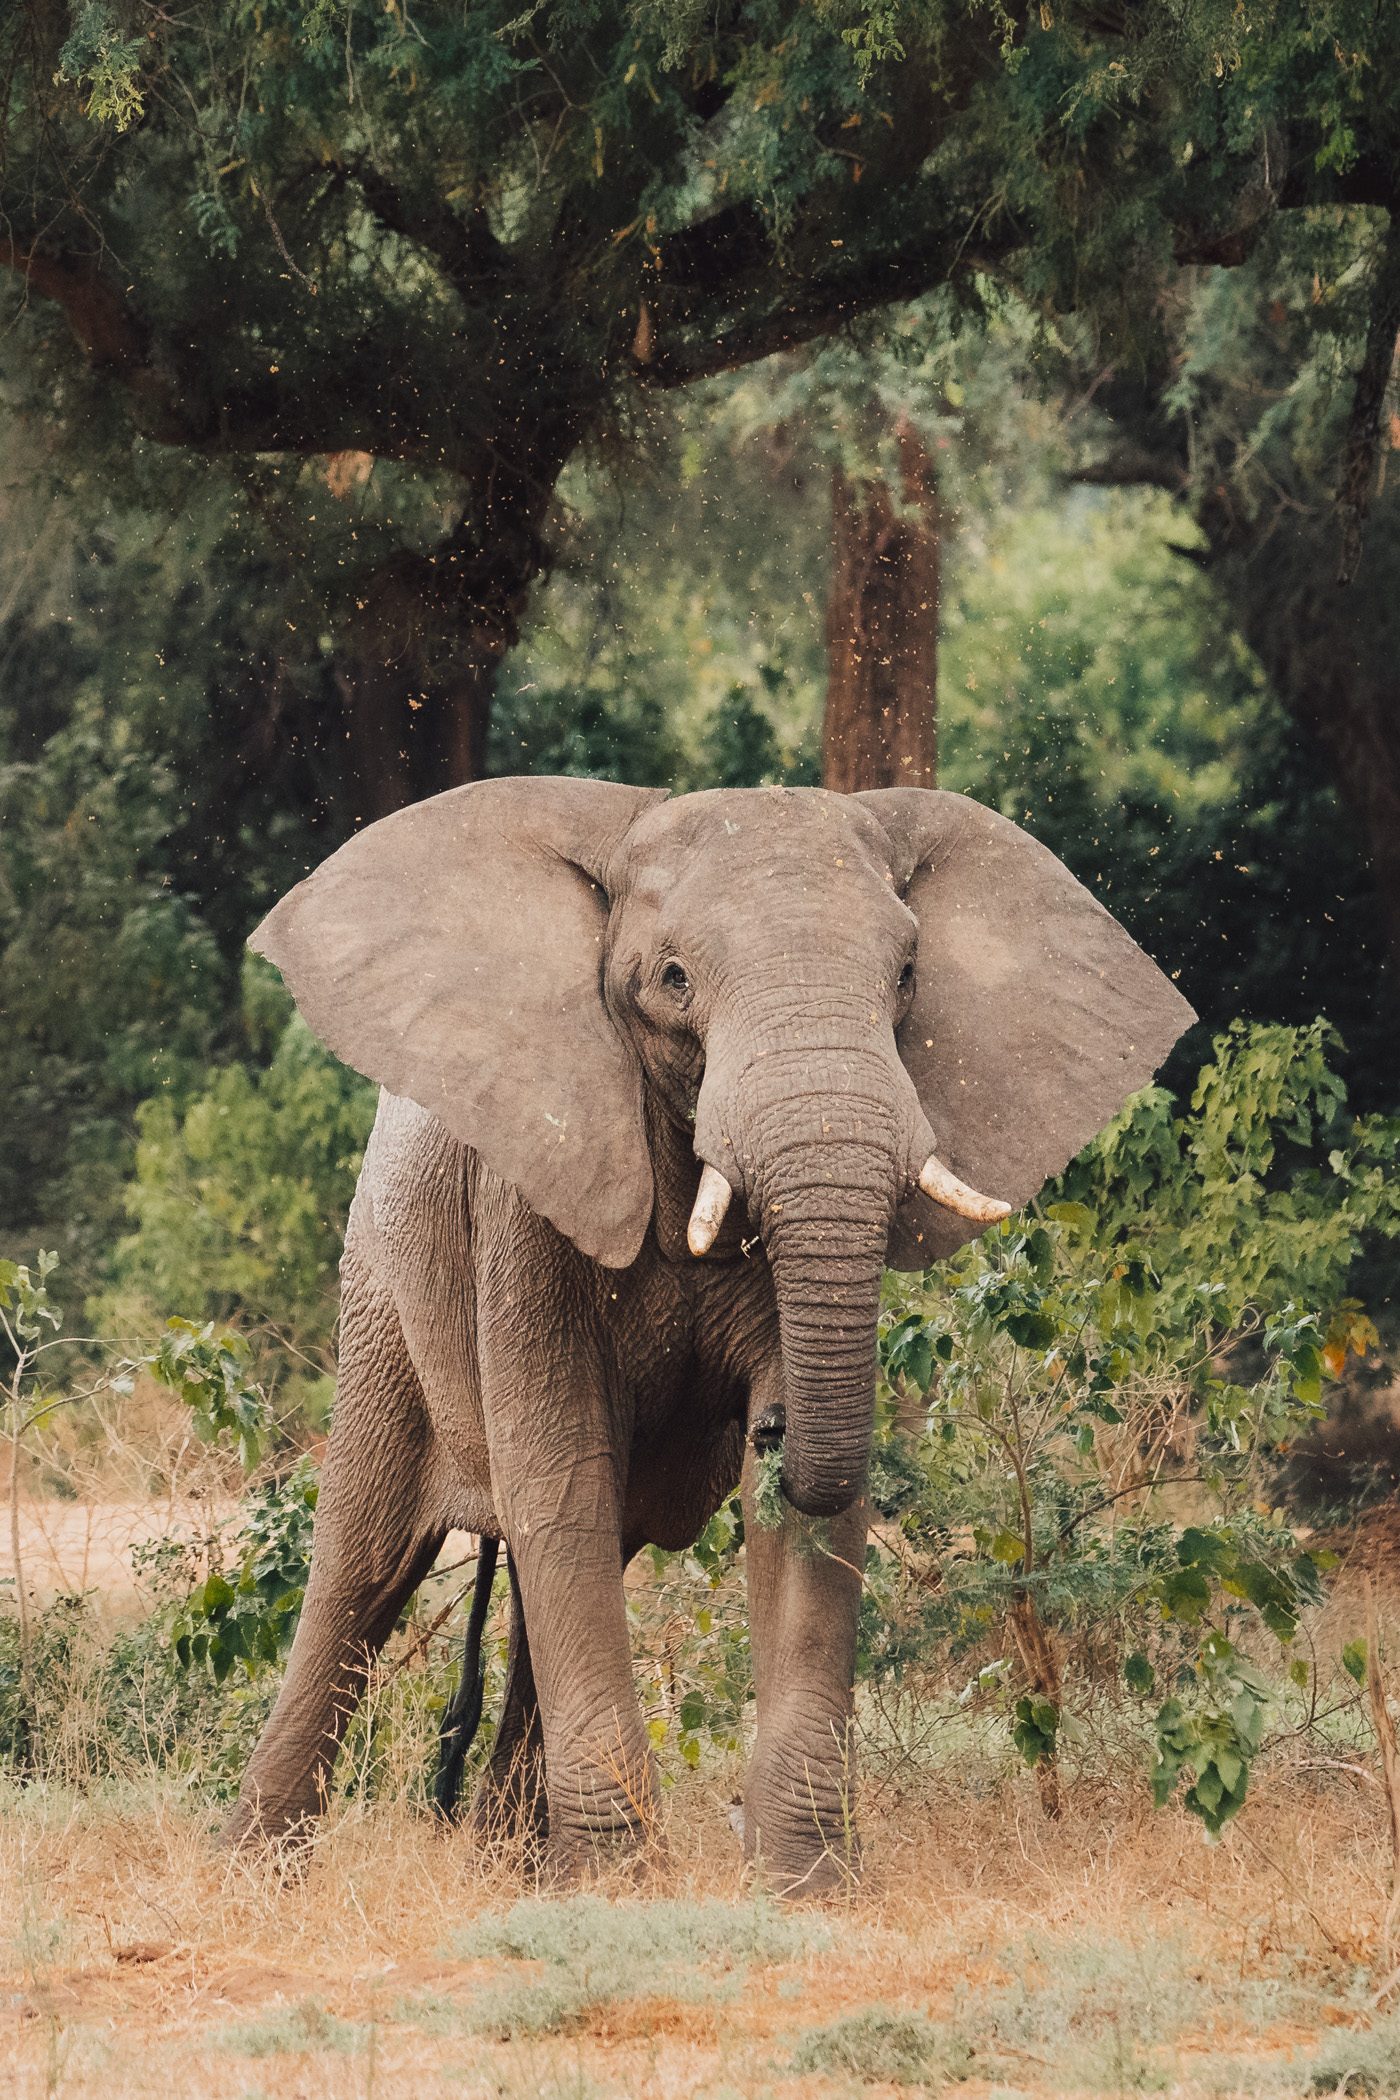 Elephant in Lower Zambezi National Park in Zambia